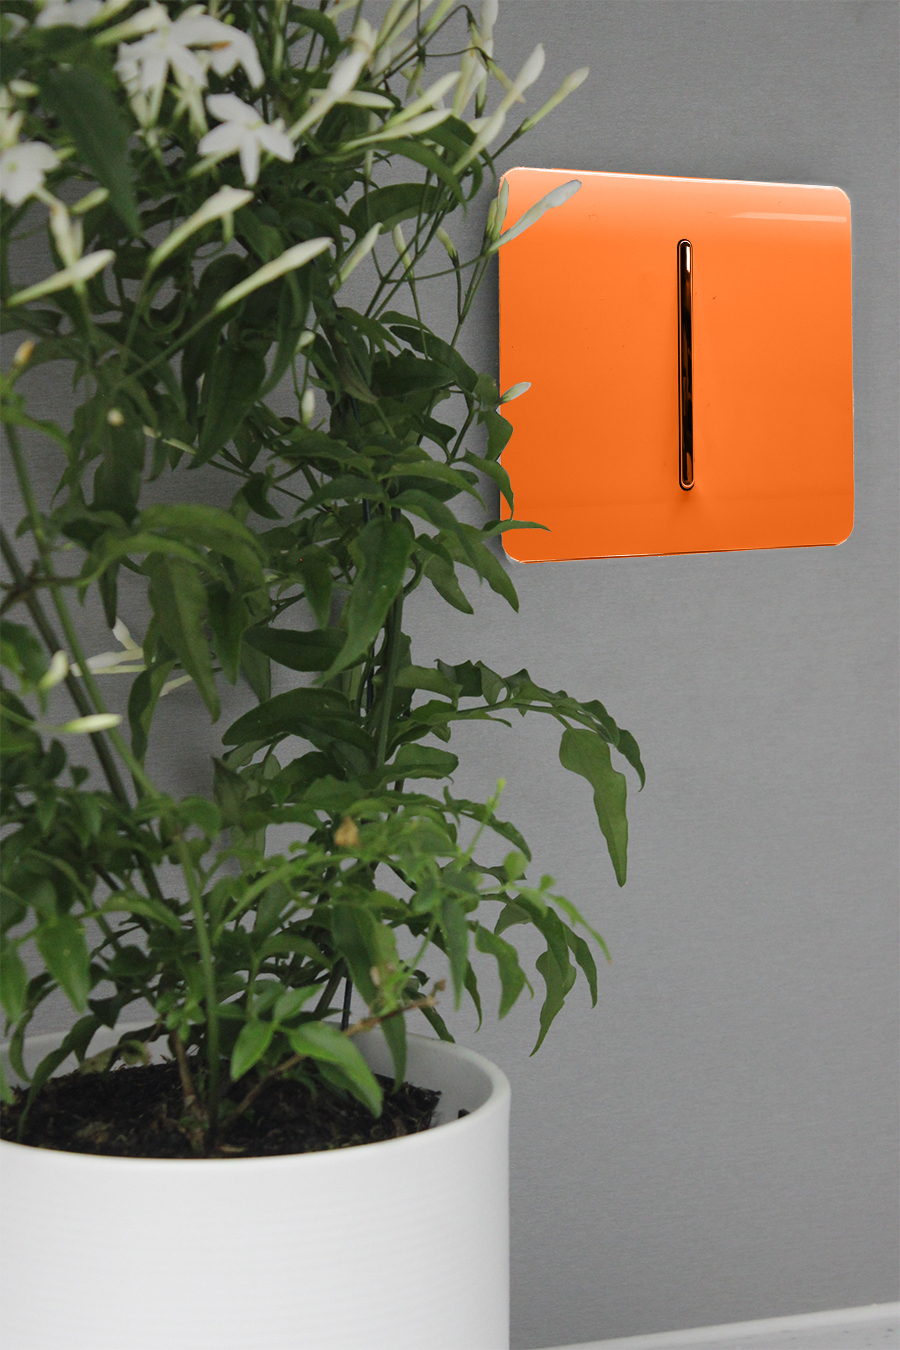 Orange Wiring Accessories Trendi Decorative Screwless